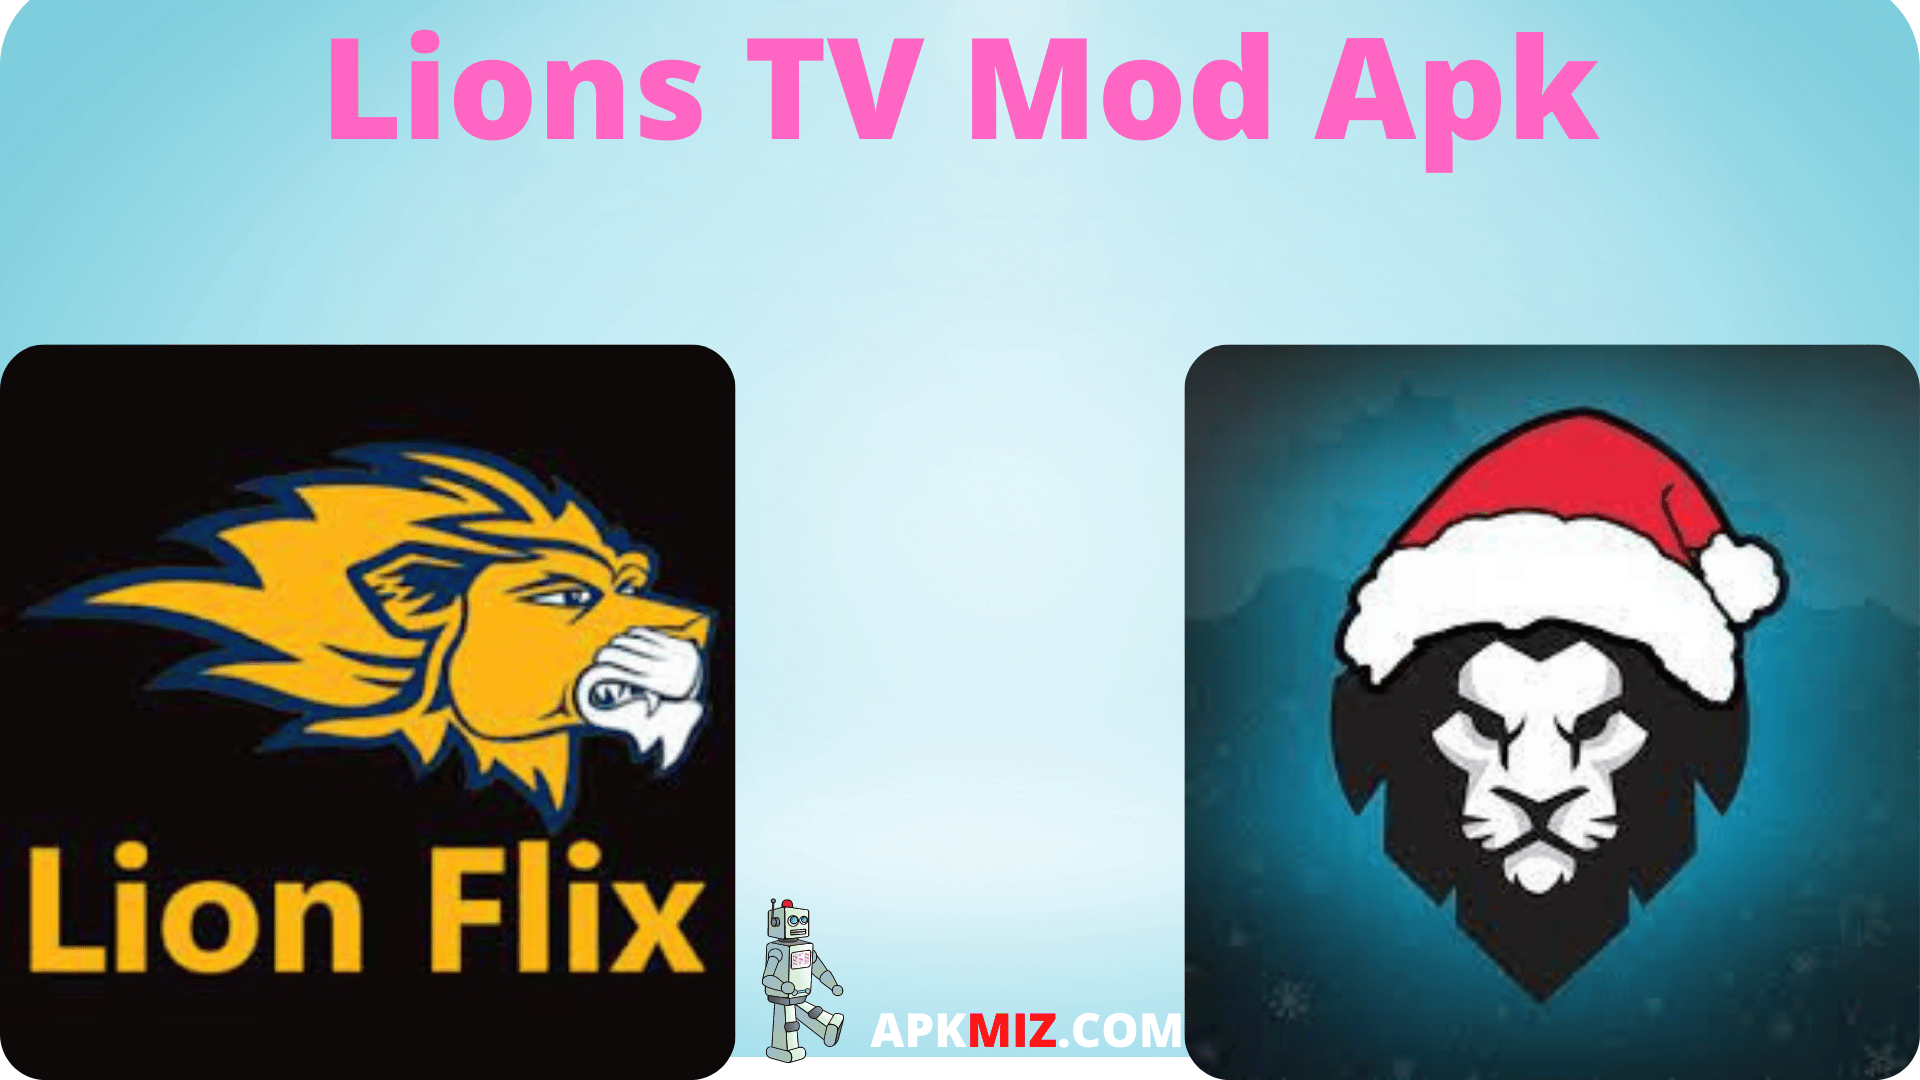 Lionz TV Mod Apk